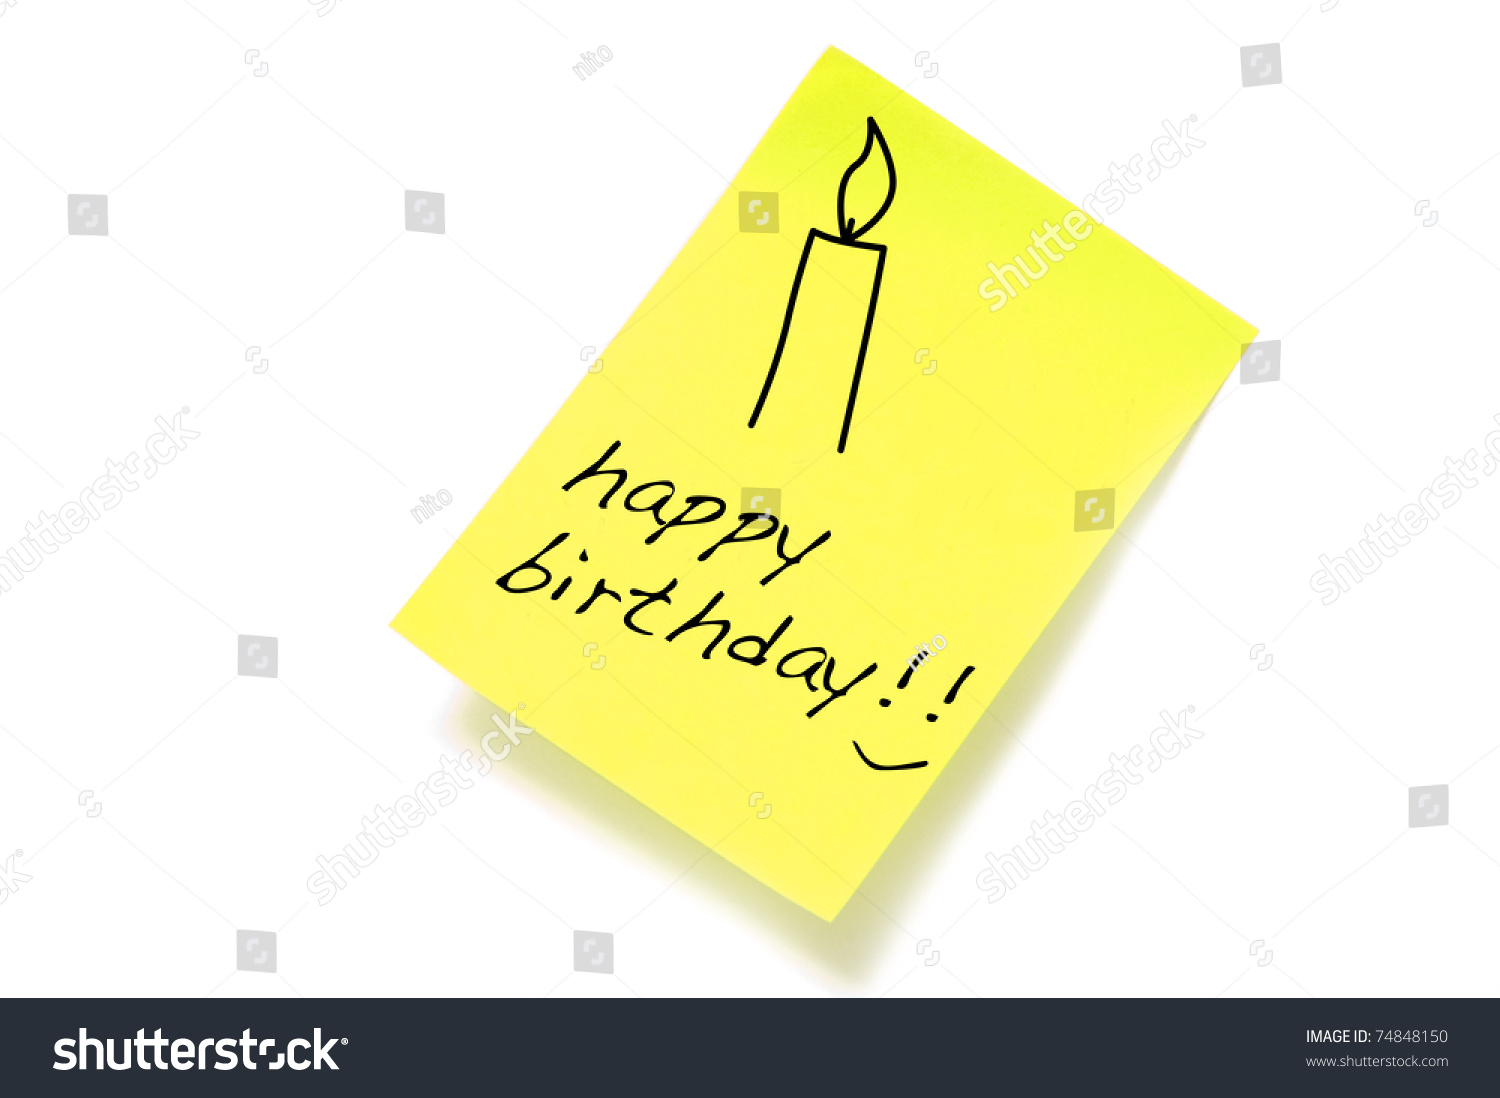 Happy Birthday Written Yellow Sticky Note Stock Photo 74848150 ...